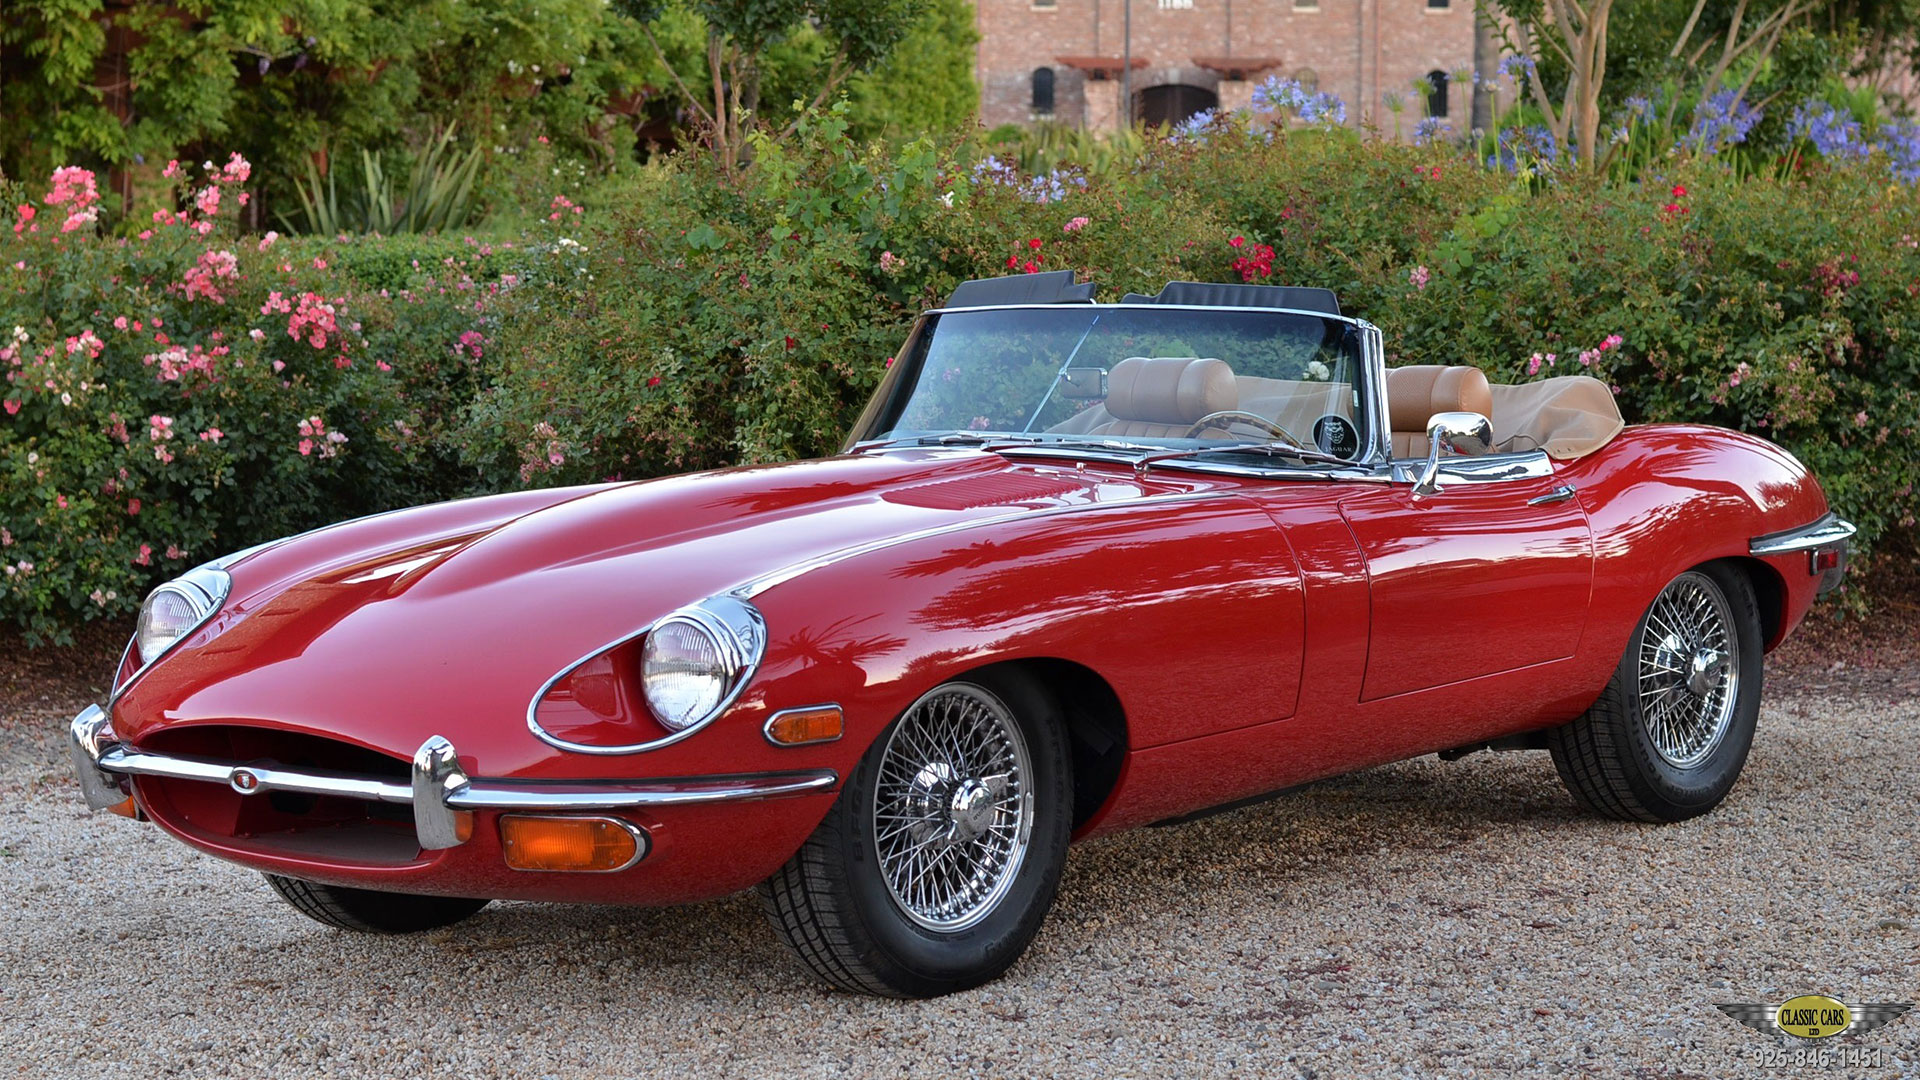 Red Jaguar classic car